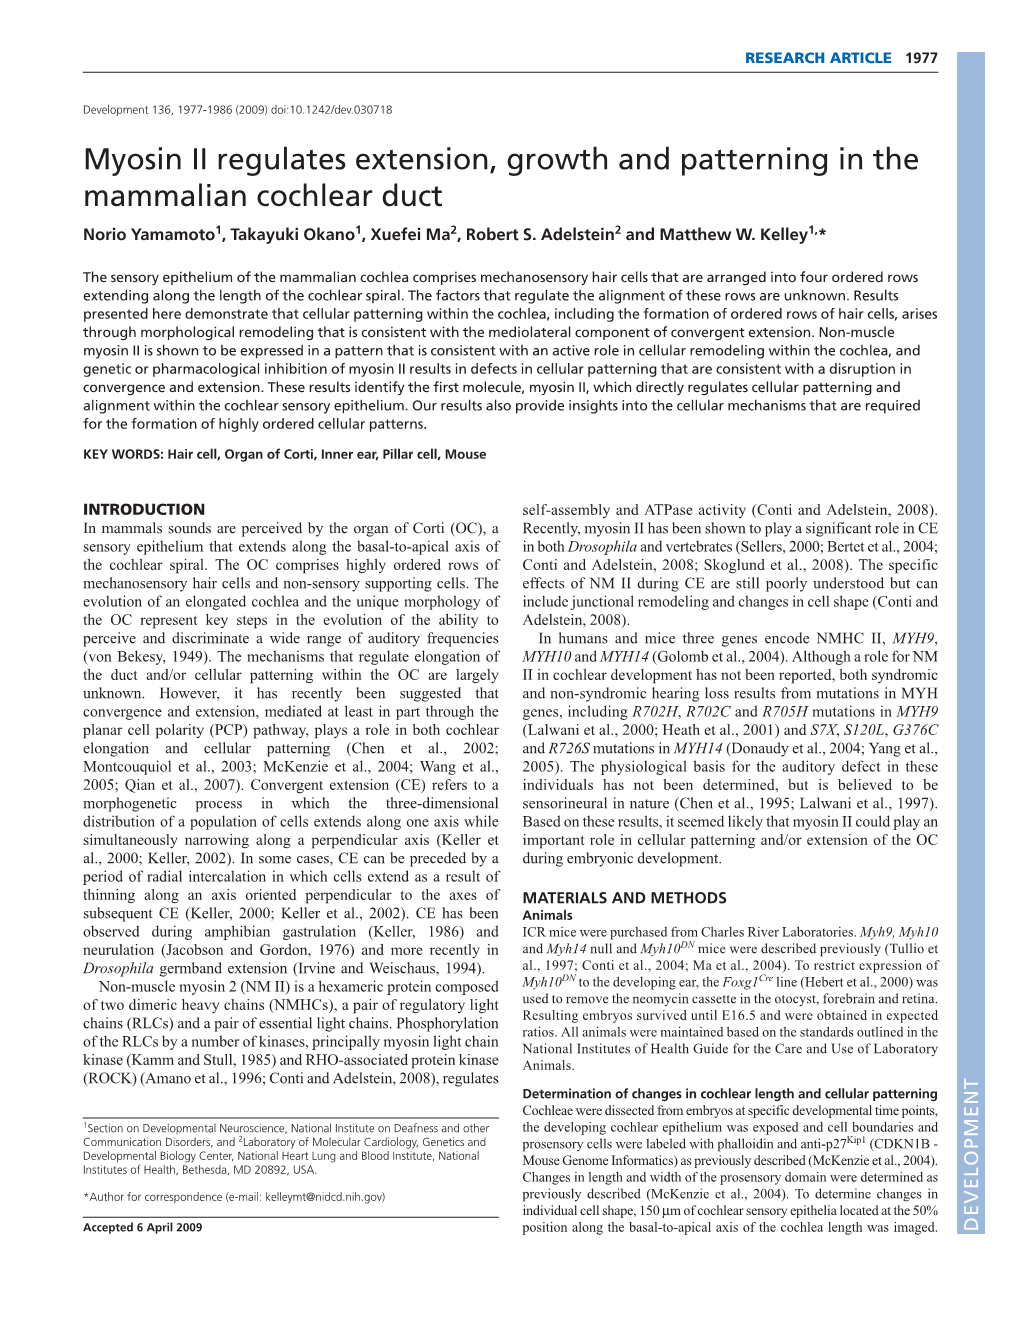 Myosin II Regulates Extension, Growth and Patterning in the Mammalian Cochlear Duct Norio Yamamoto1, Takayuki Okano1, Xuefei Ma2, Robert S